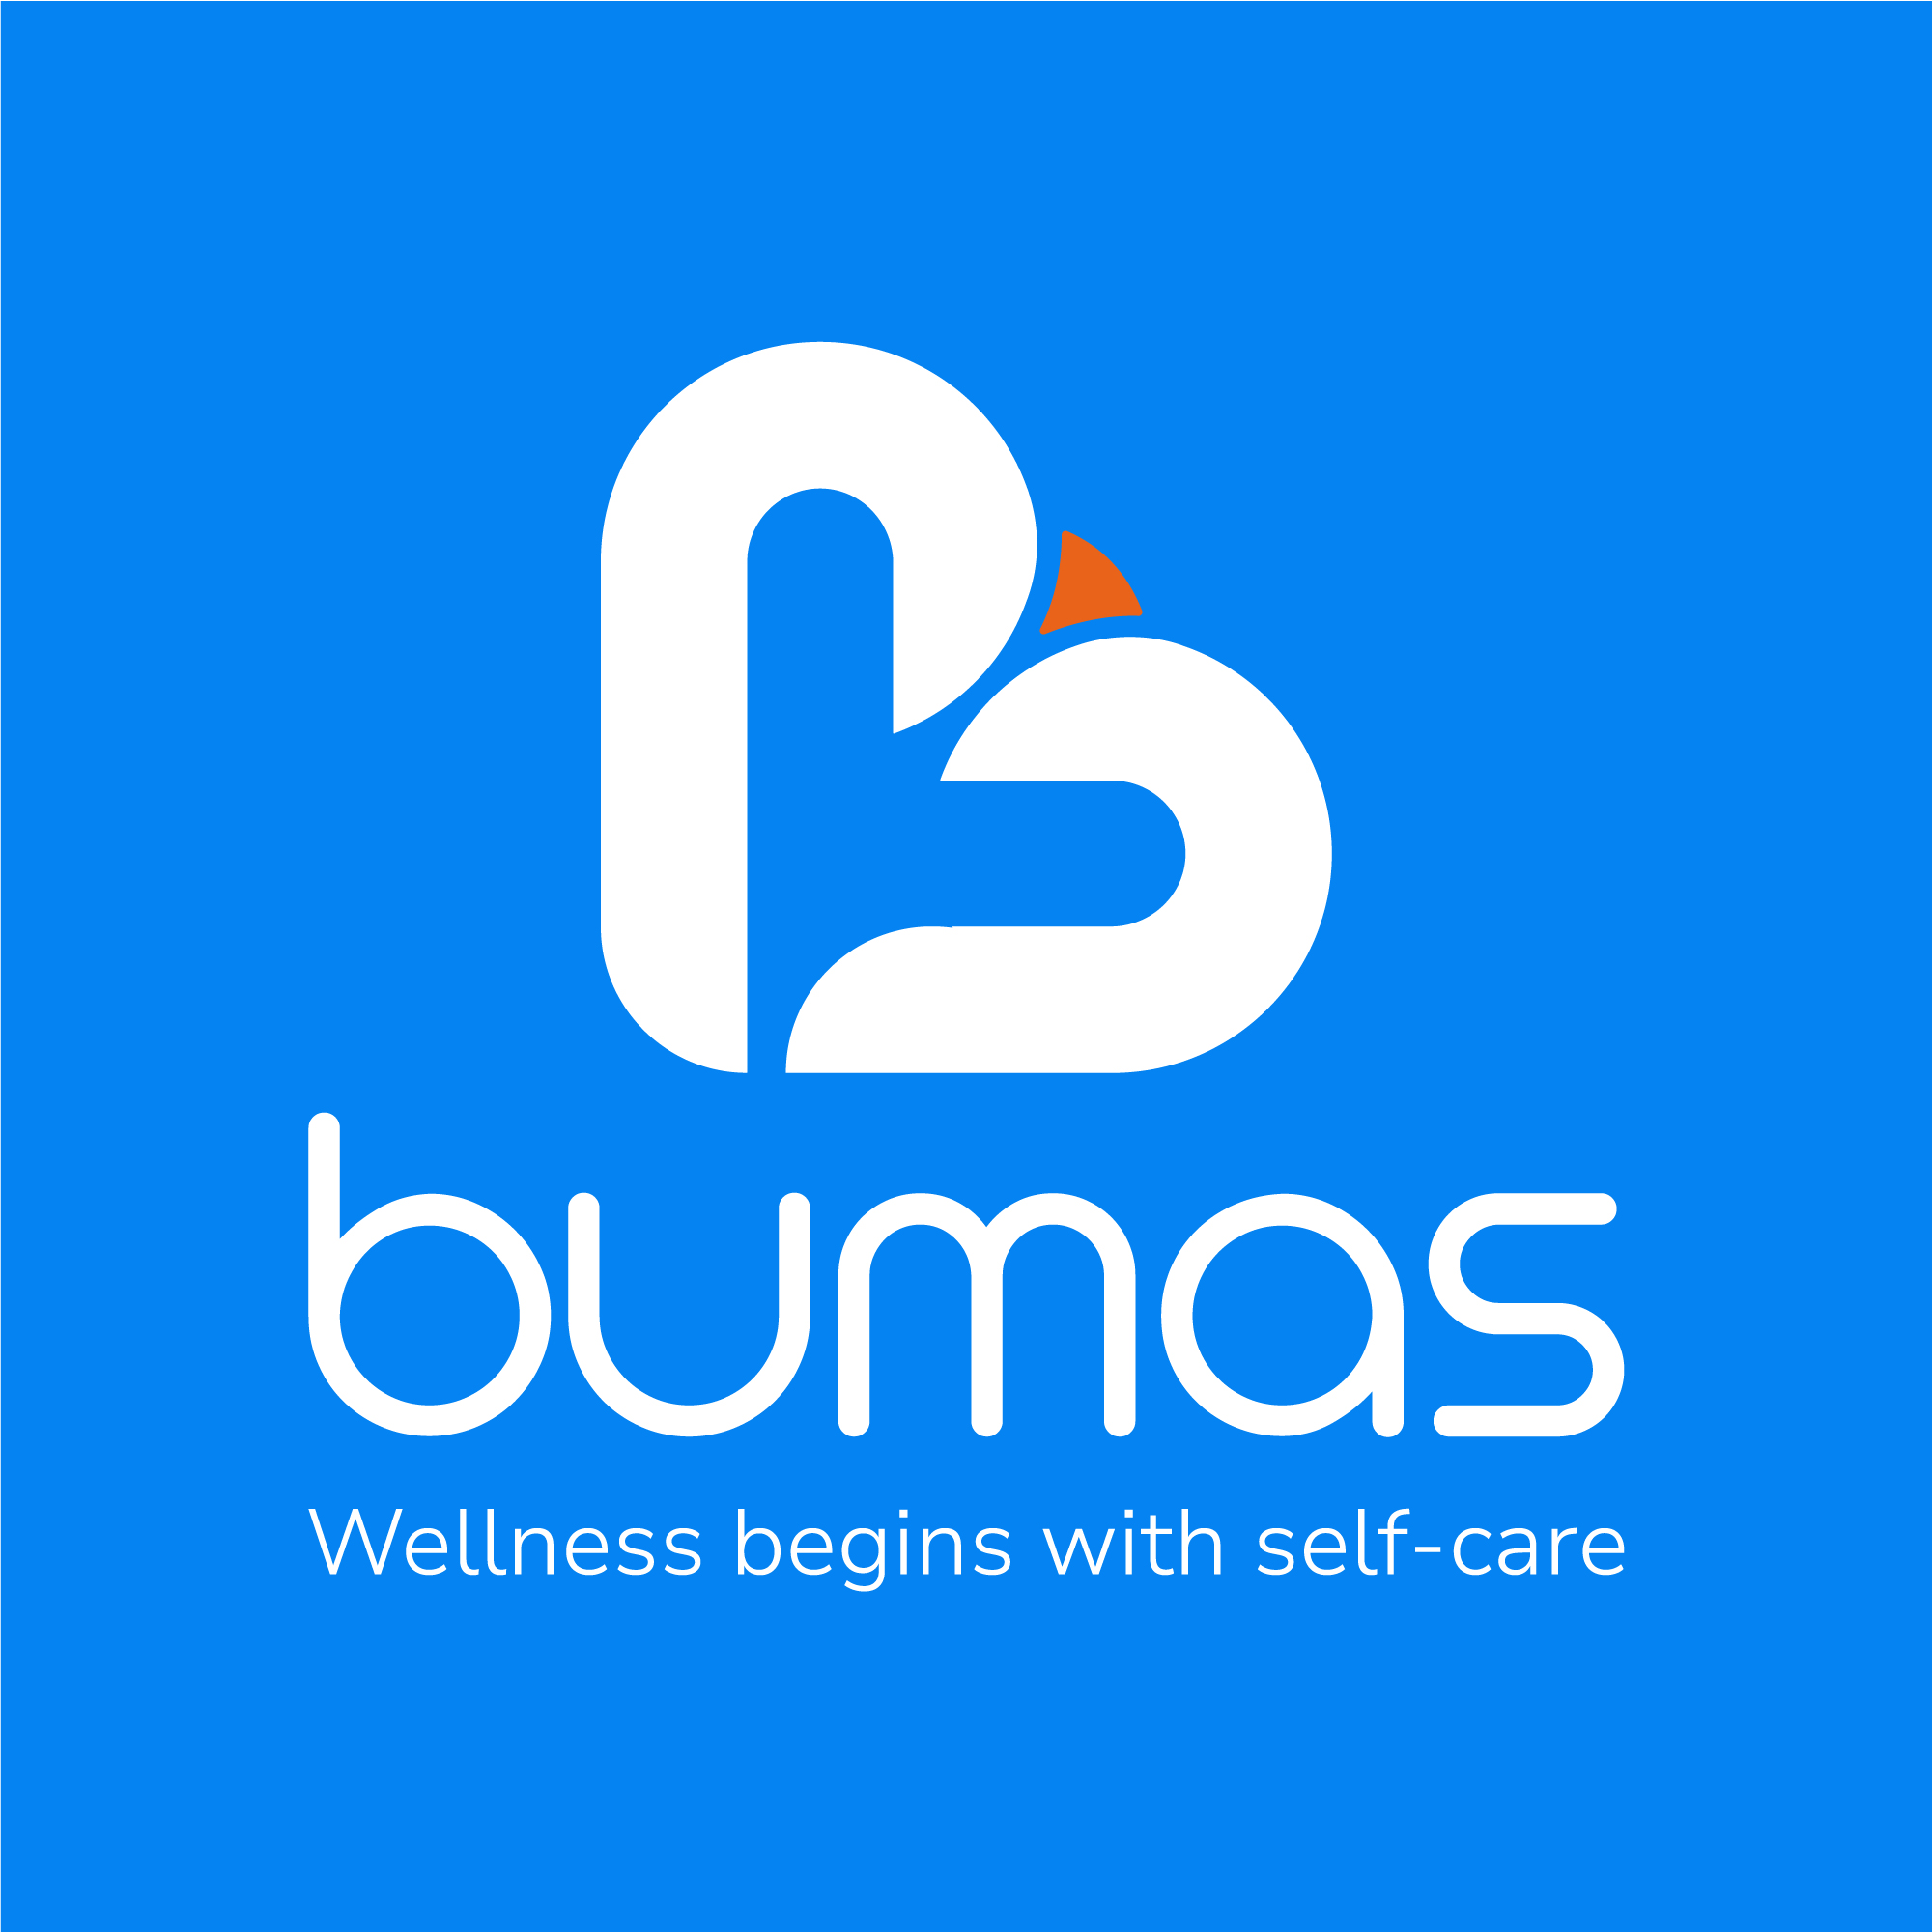 BUMAS Official Store